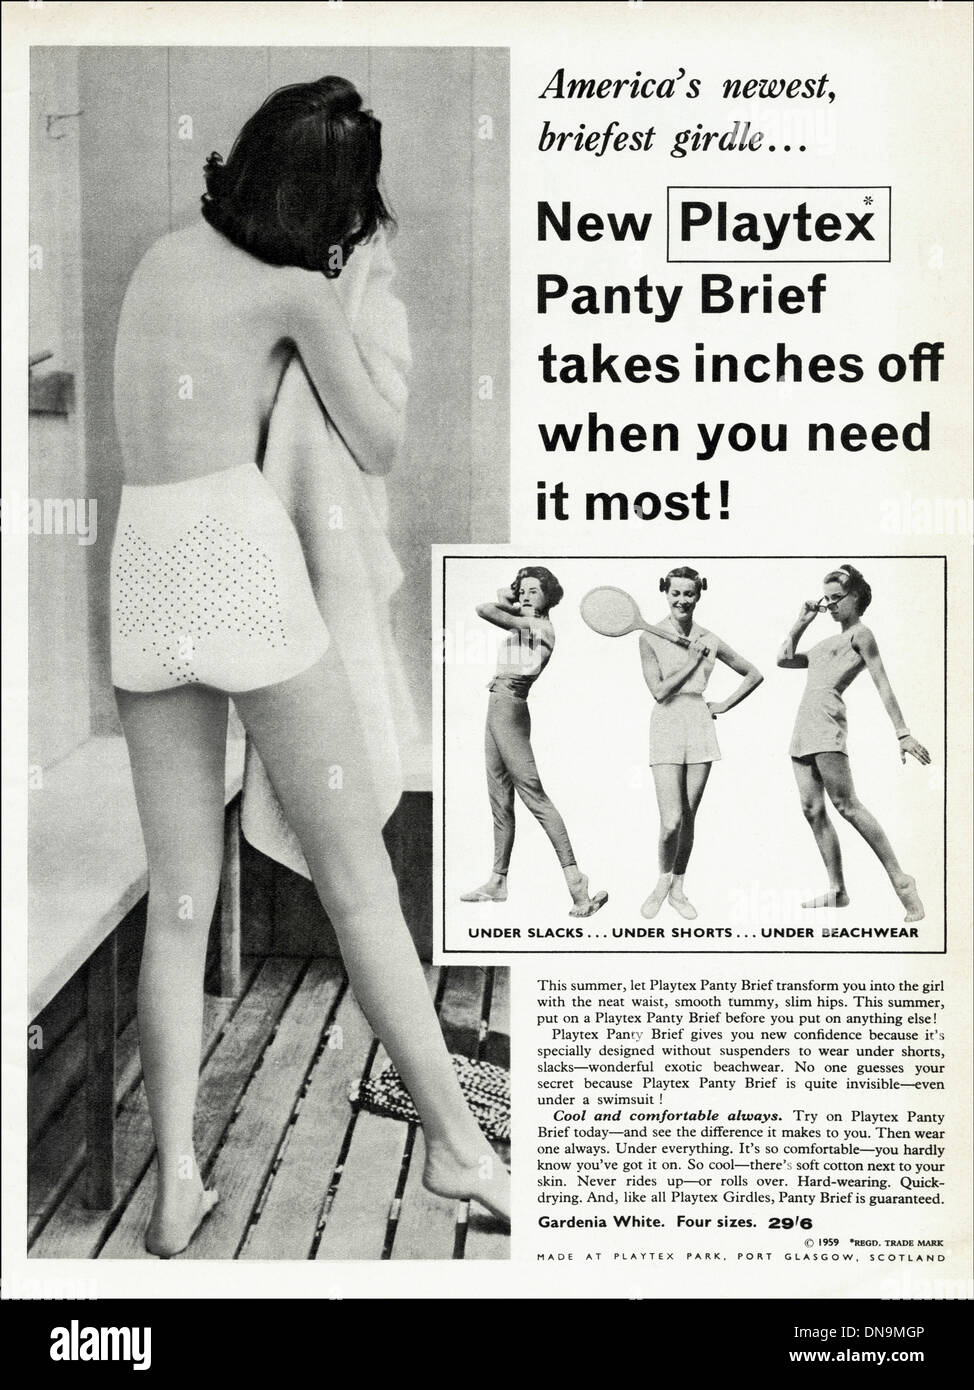 1950s advertising. Vintage original women's fashion magazine